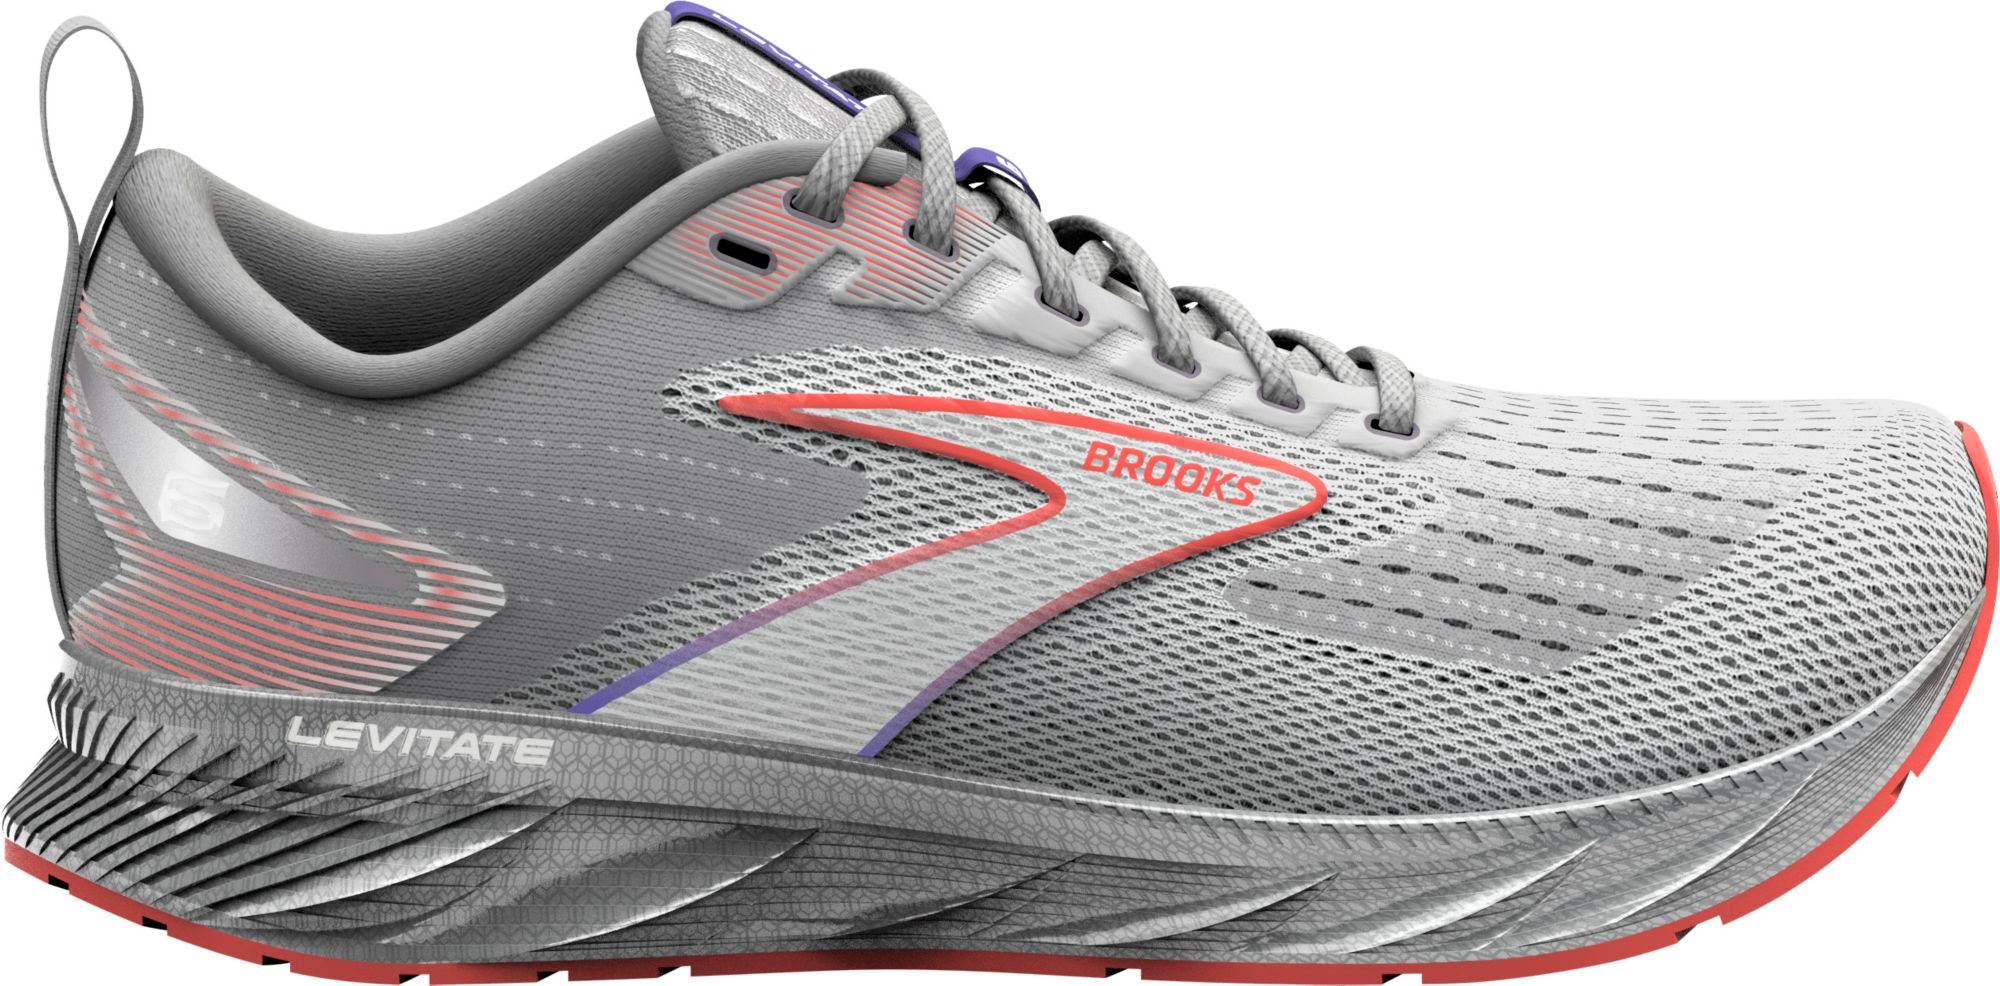 Men's & Women's Running/Basketball Shoes: Men's Brooks Lavitate 6 (Dawn Blue) $64.55, Men's Brooks Pittsburgh Marathon Trace 2 $55.95 & More + Free Shipping